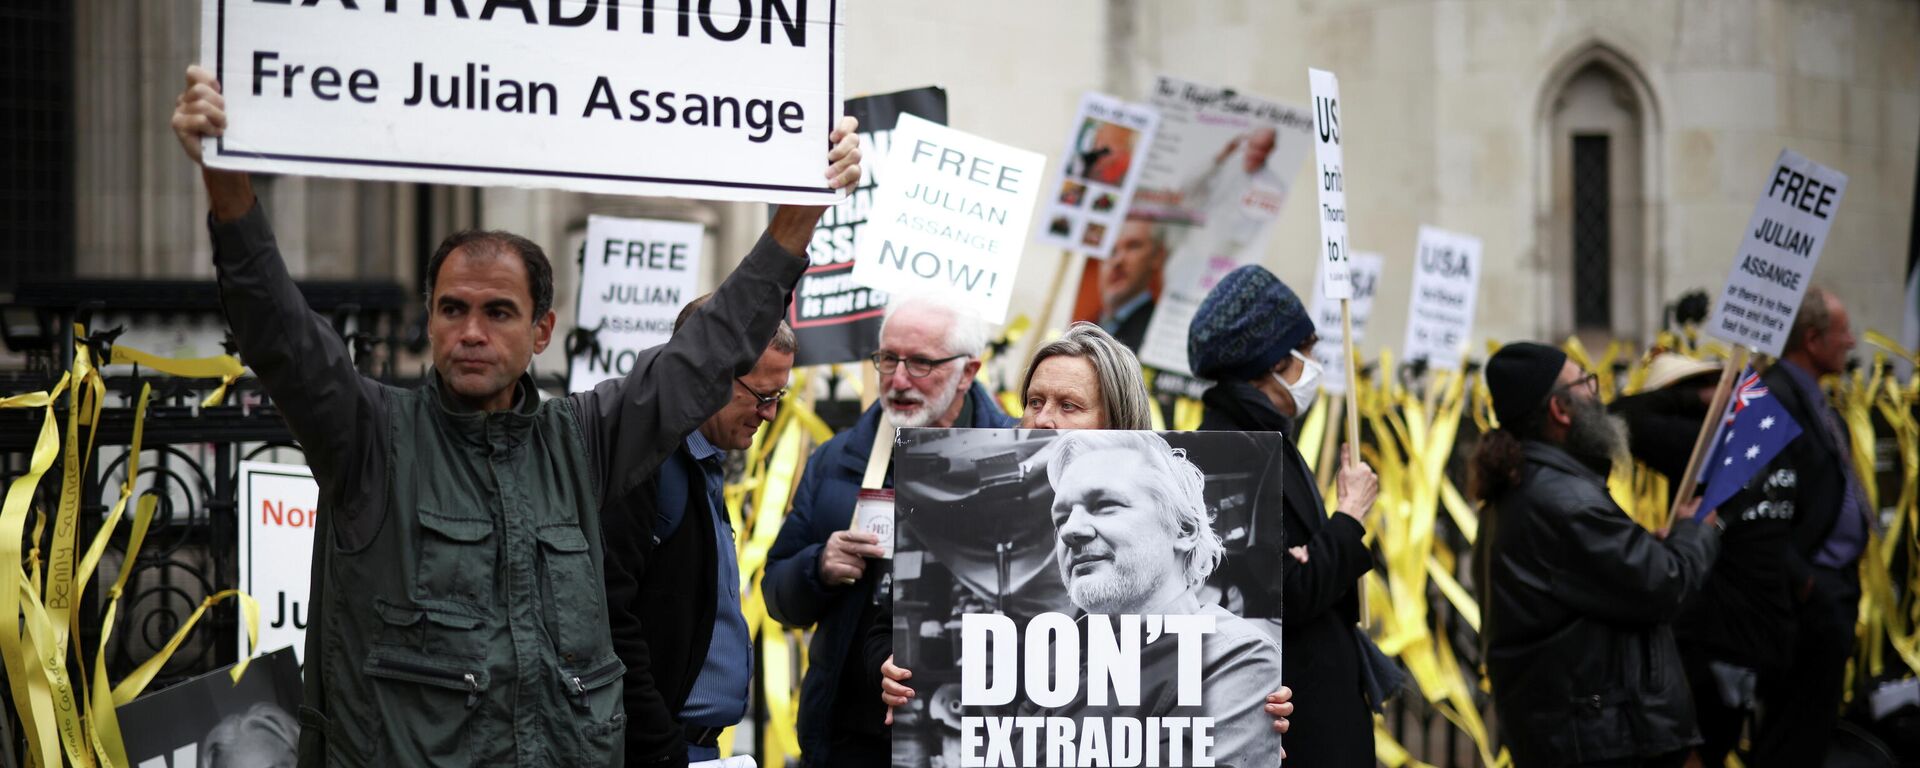 La protesta en Londres, dedicado a Julian Assange - Sputnik Mundo, 1920, 27.10.2021